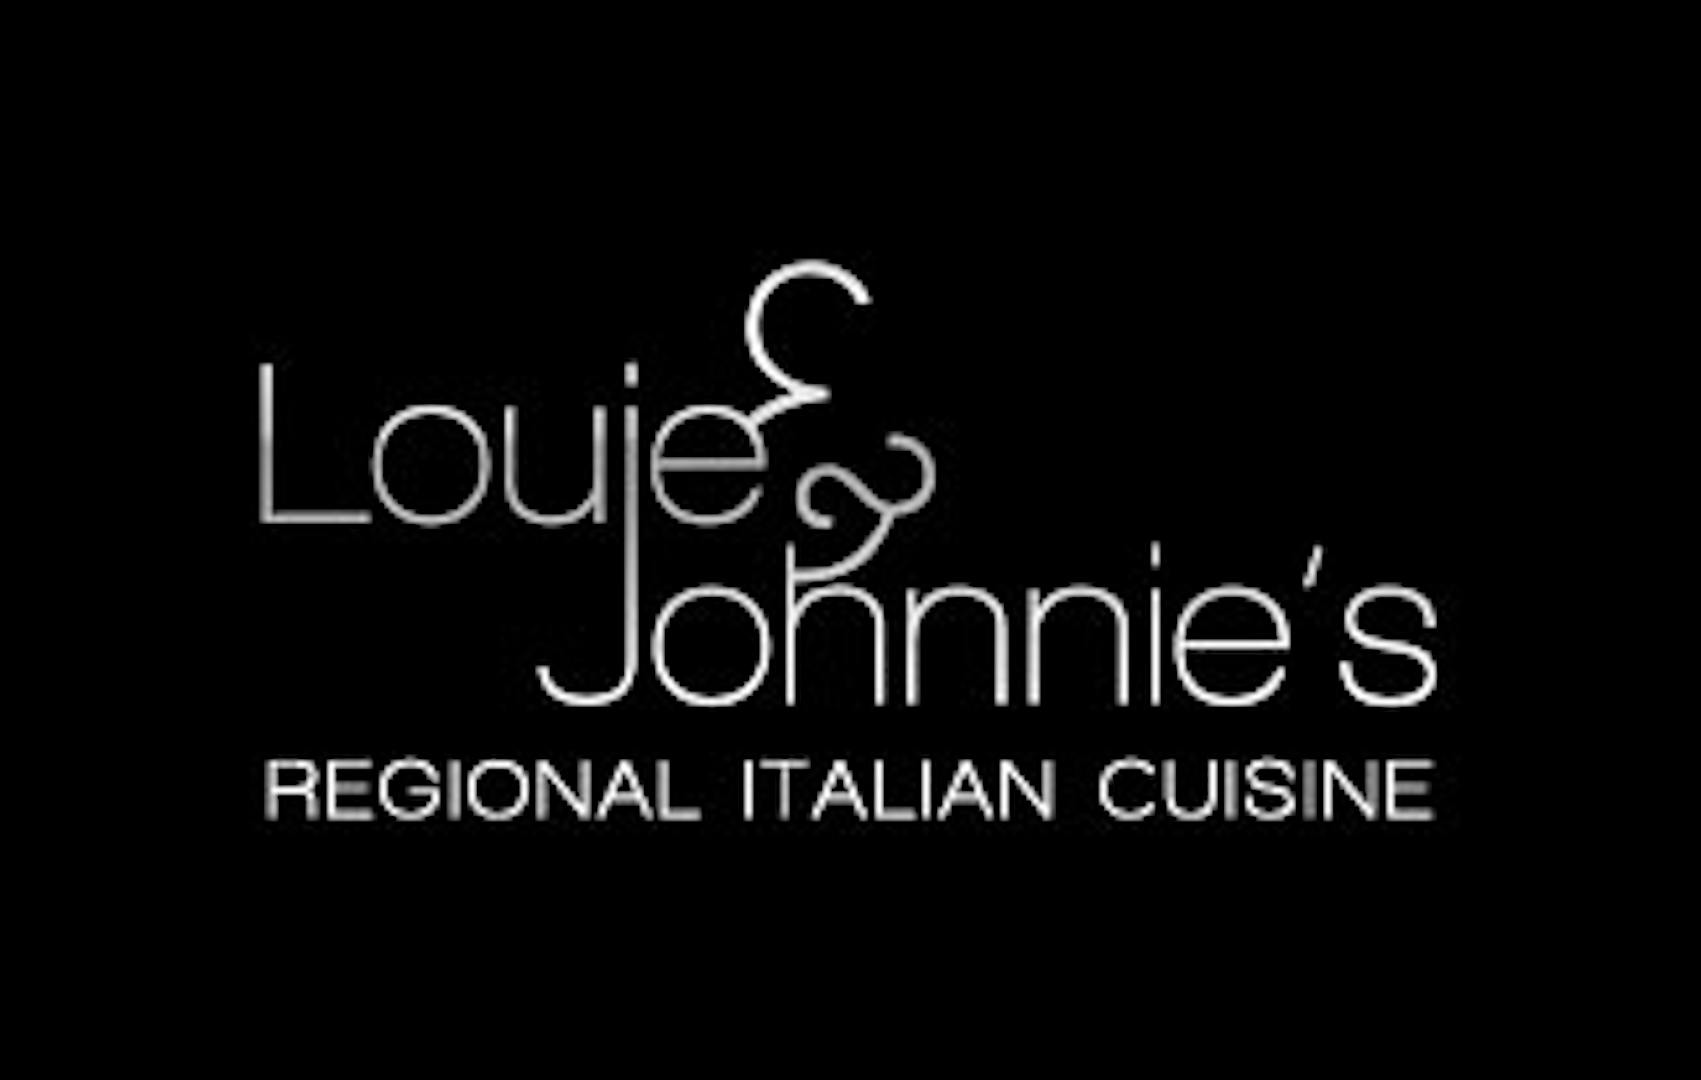 Louie & Johnnie's